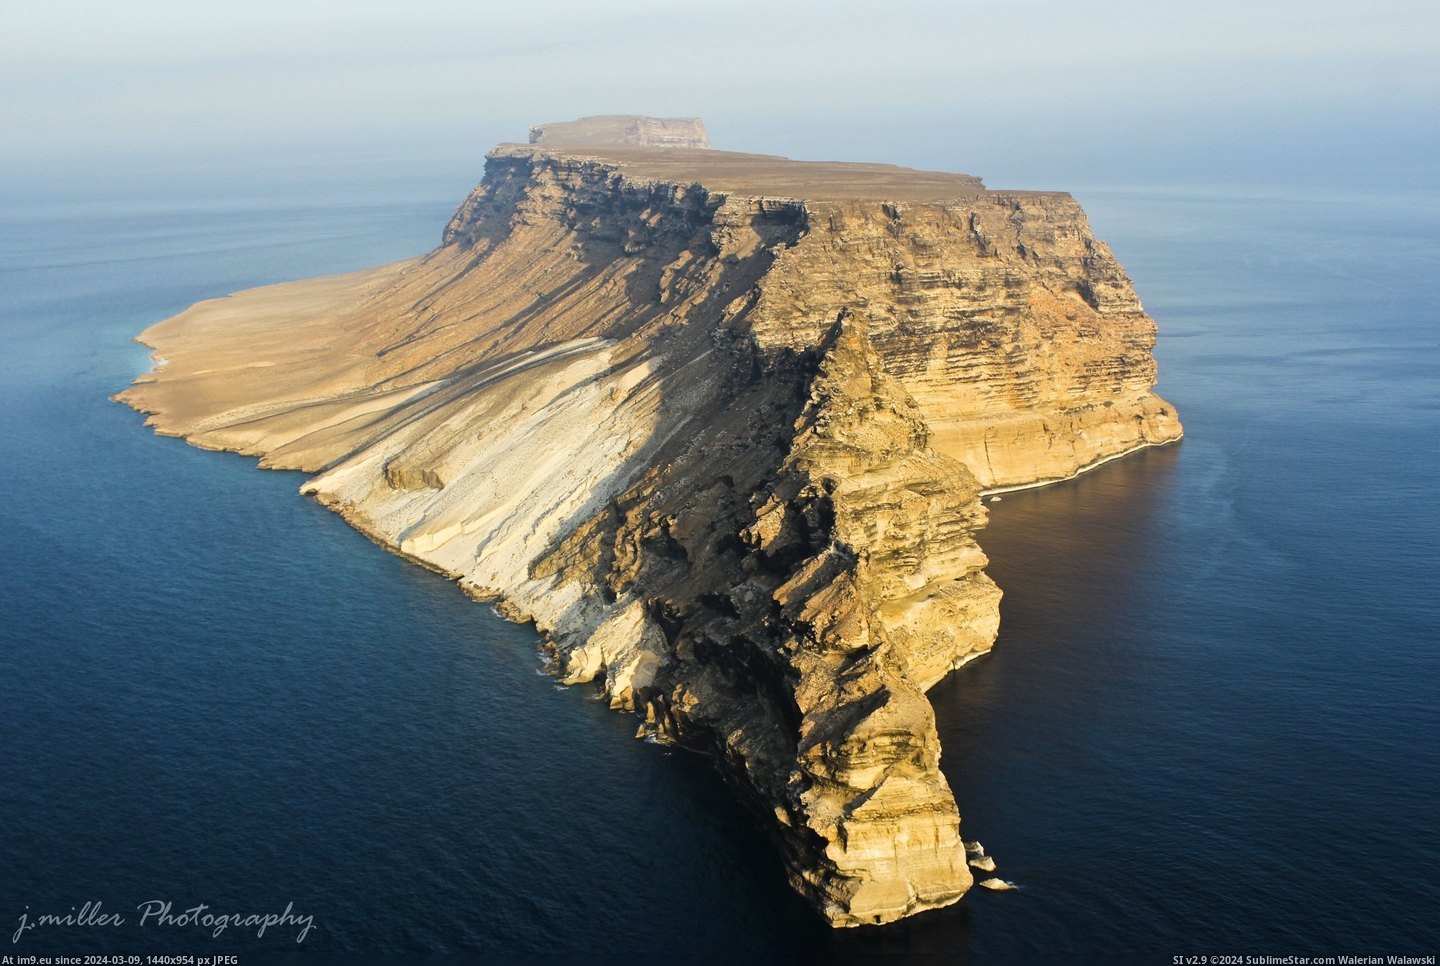 #Island #Public #Yemen #Darsa #Aerial #Photograph [Earthporn] Darsa Island, Yemen. Only known public aerial photograph of this island. [OC][2,073 × 3,110] Pic. (Изображение из альбом My r/EARTHPORN favs))